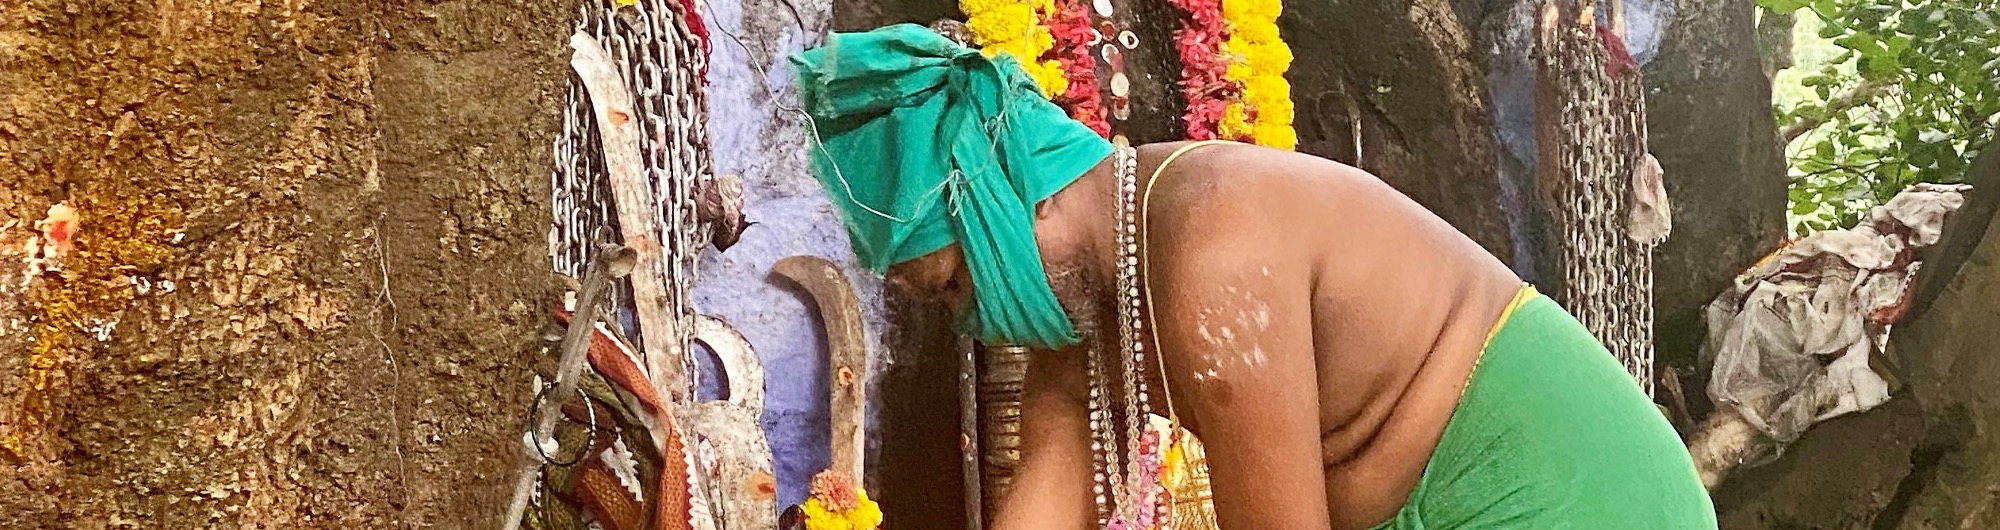 spiritual ceremoni Tamil Nadu India -inner wellbeing